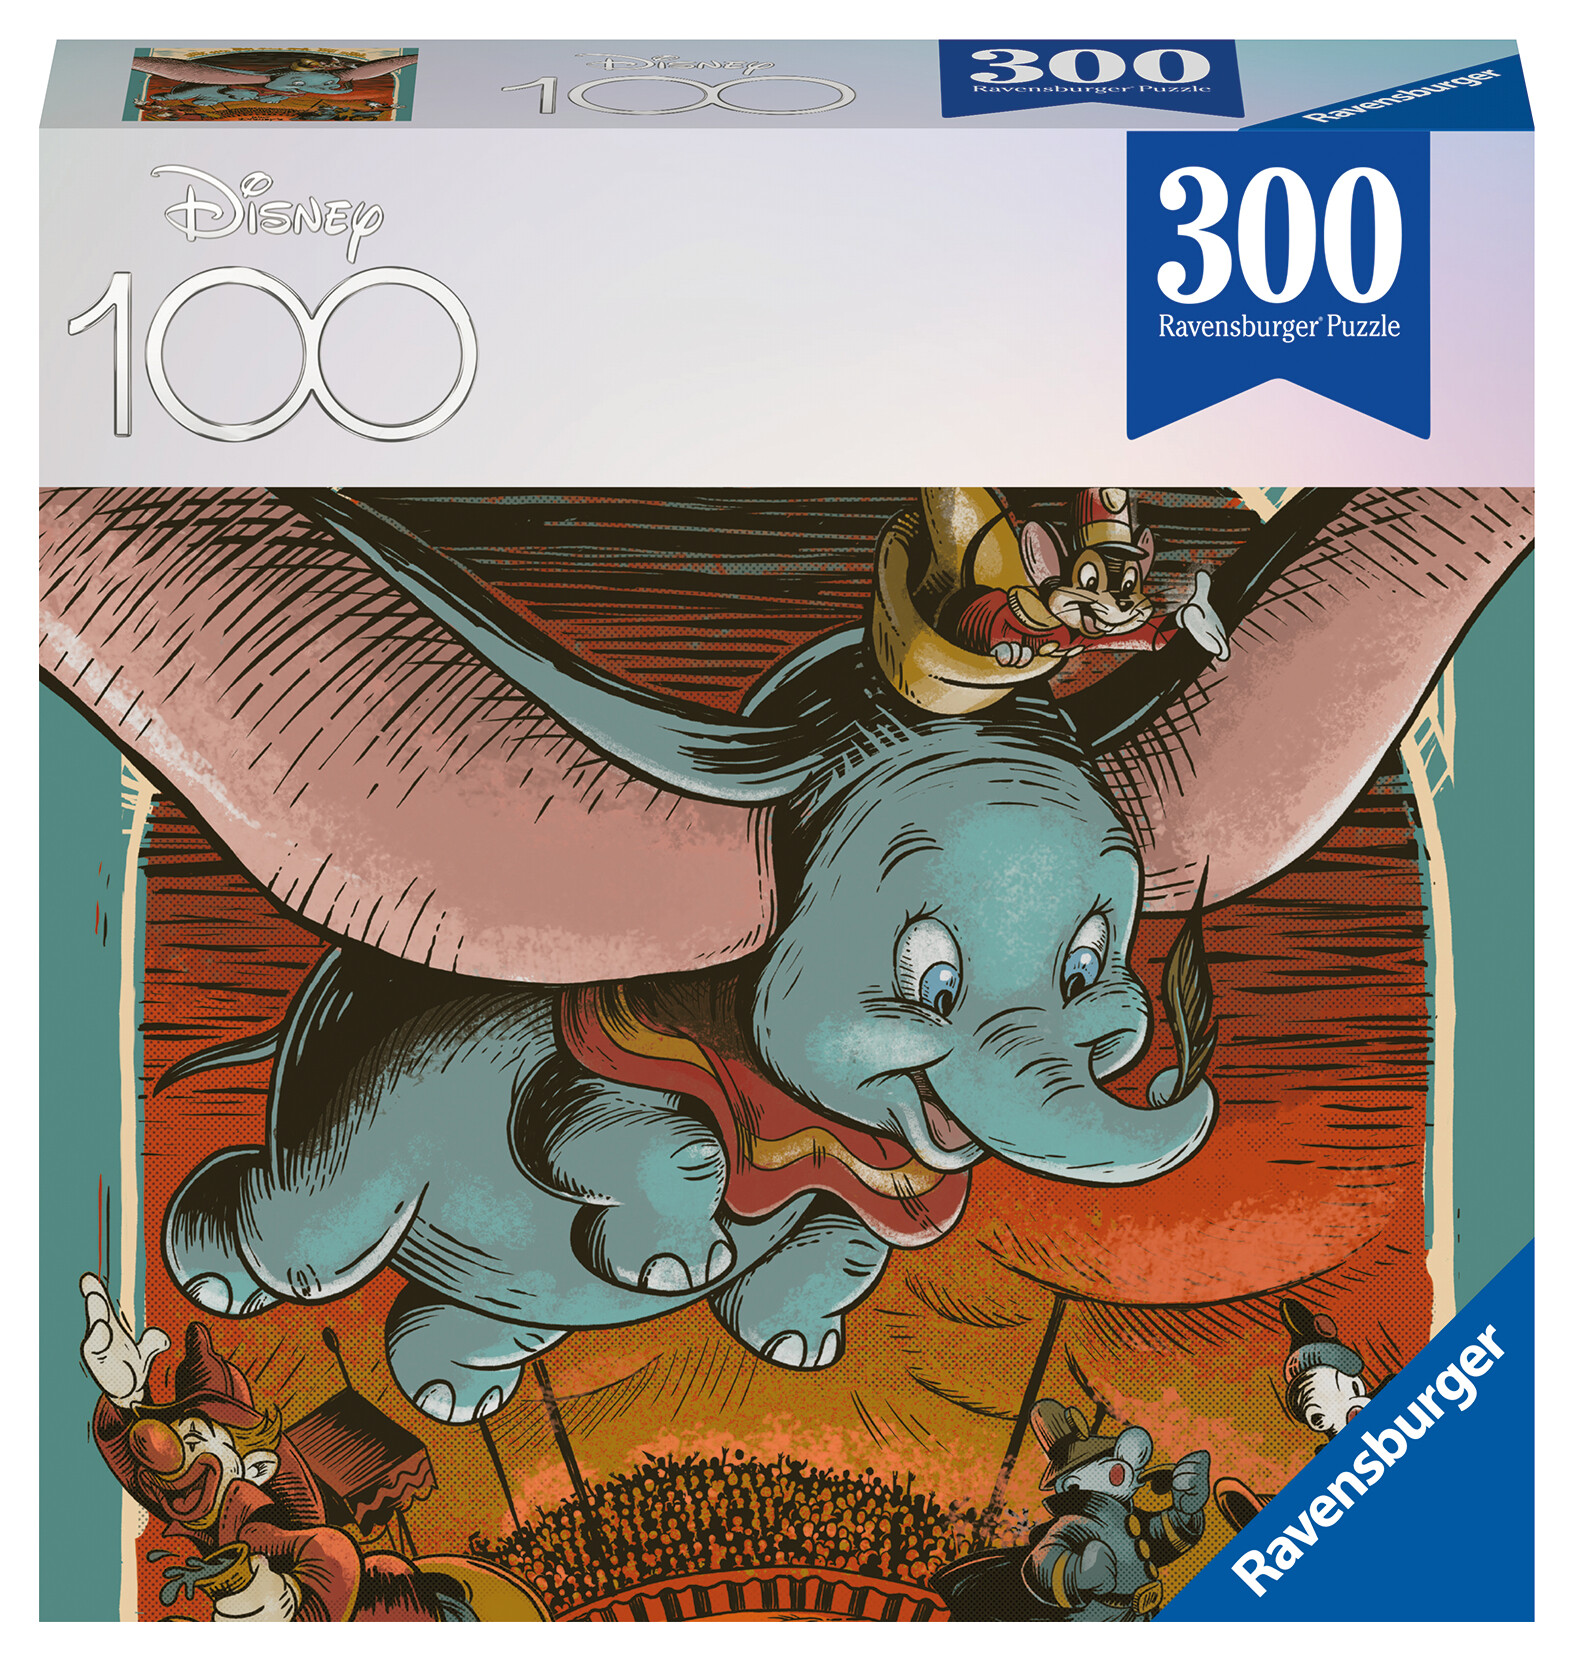 Ravensburger - puzzle disney dumbo, 300 pezzi, 8+, limited edition disney 100 - RAVENSBURGER